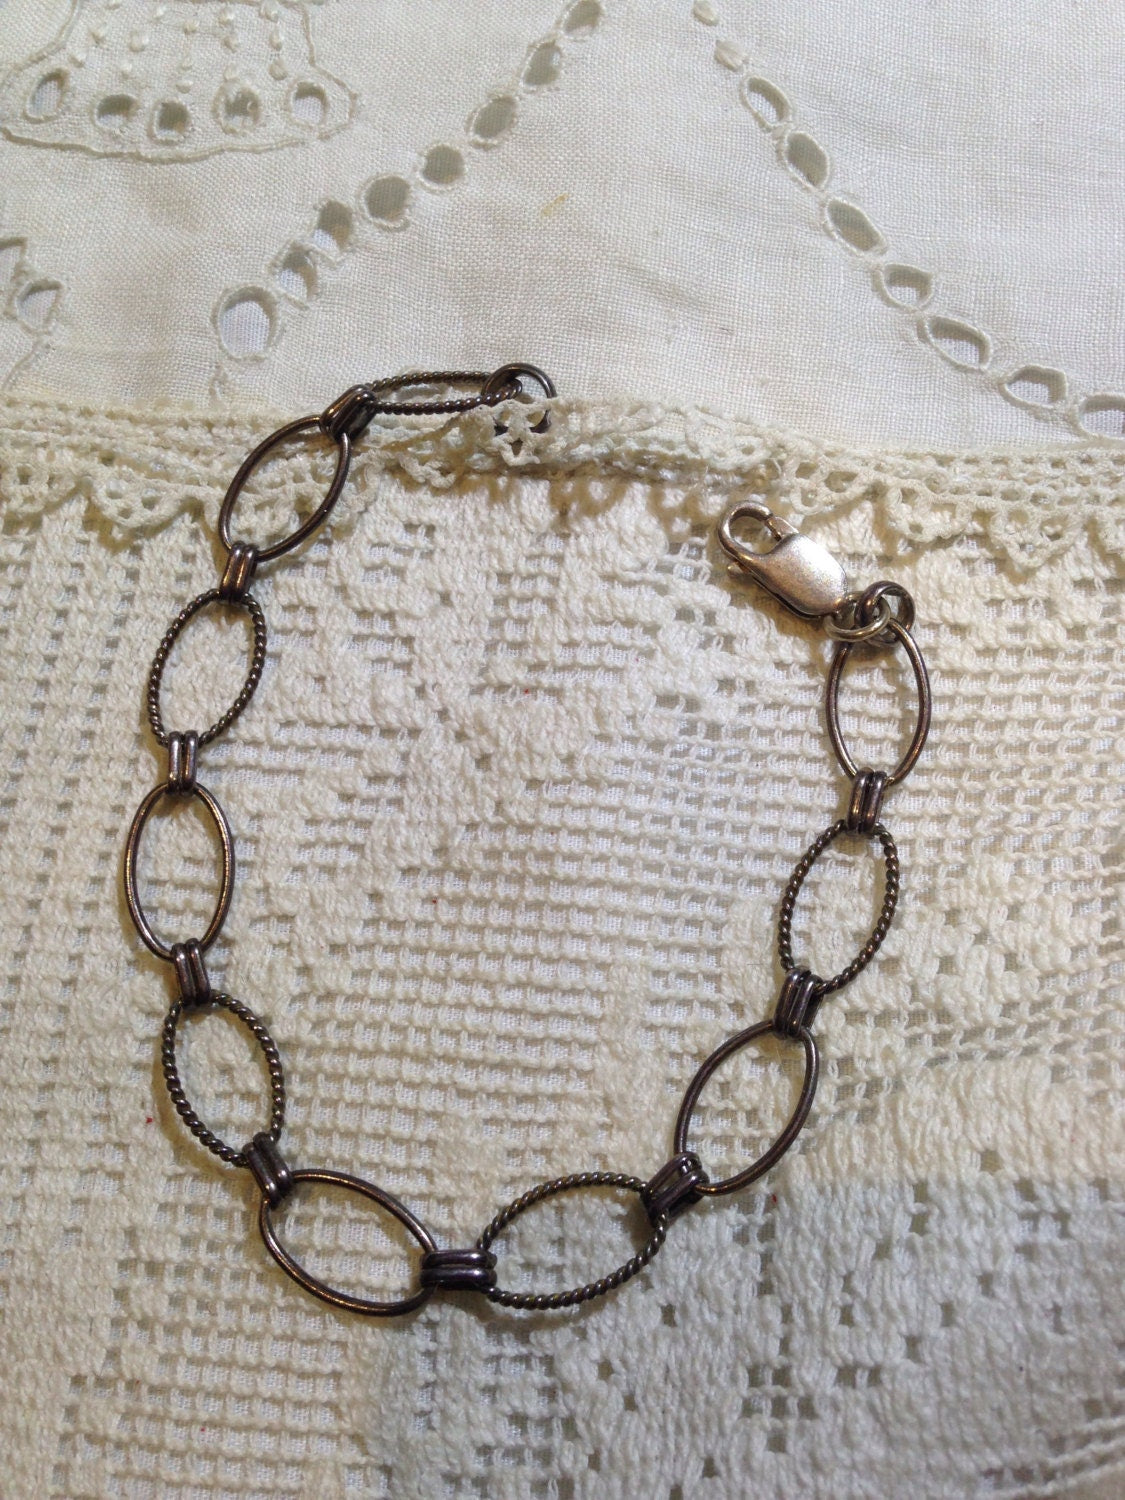 Vintage 925 Sterling SilverChain Link Charm Bracelet